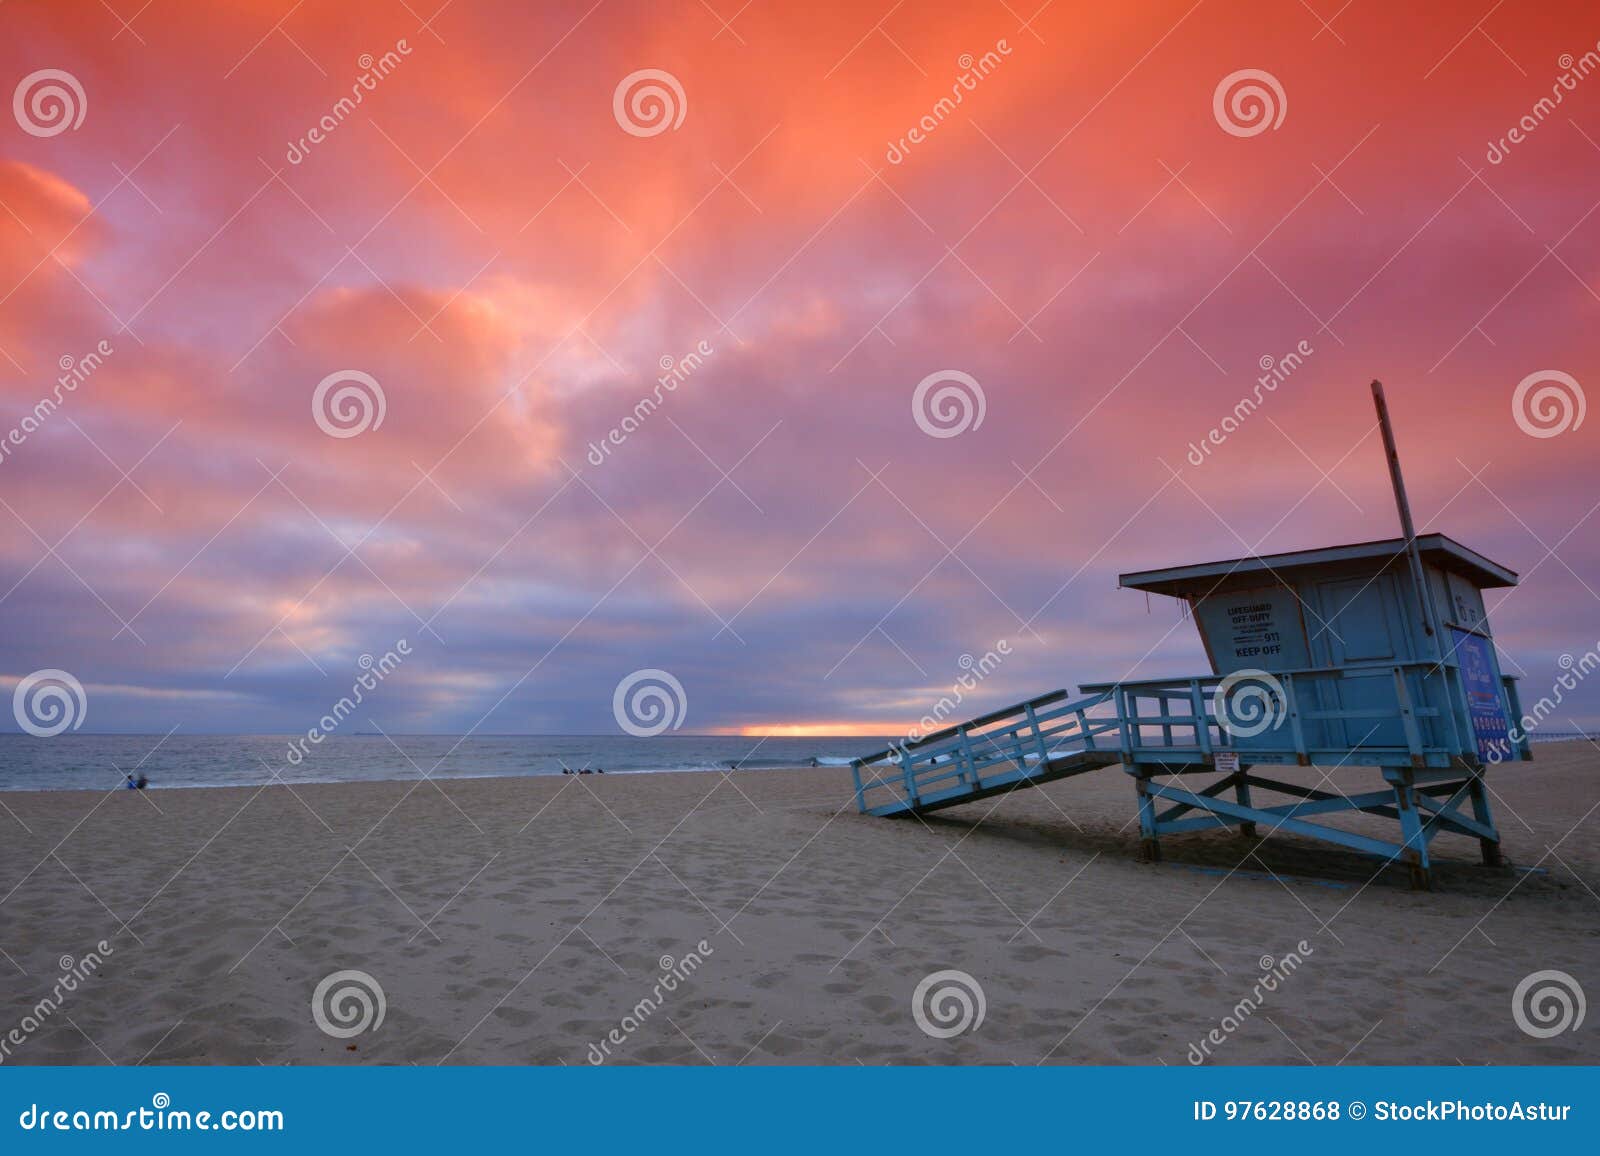 lifeguard tower at sunset at hermosa beach, california